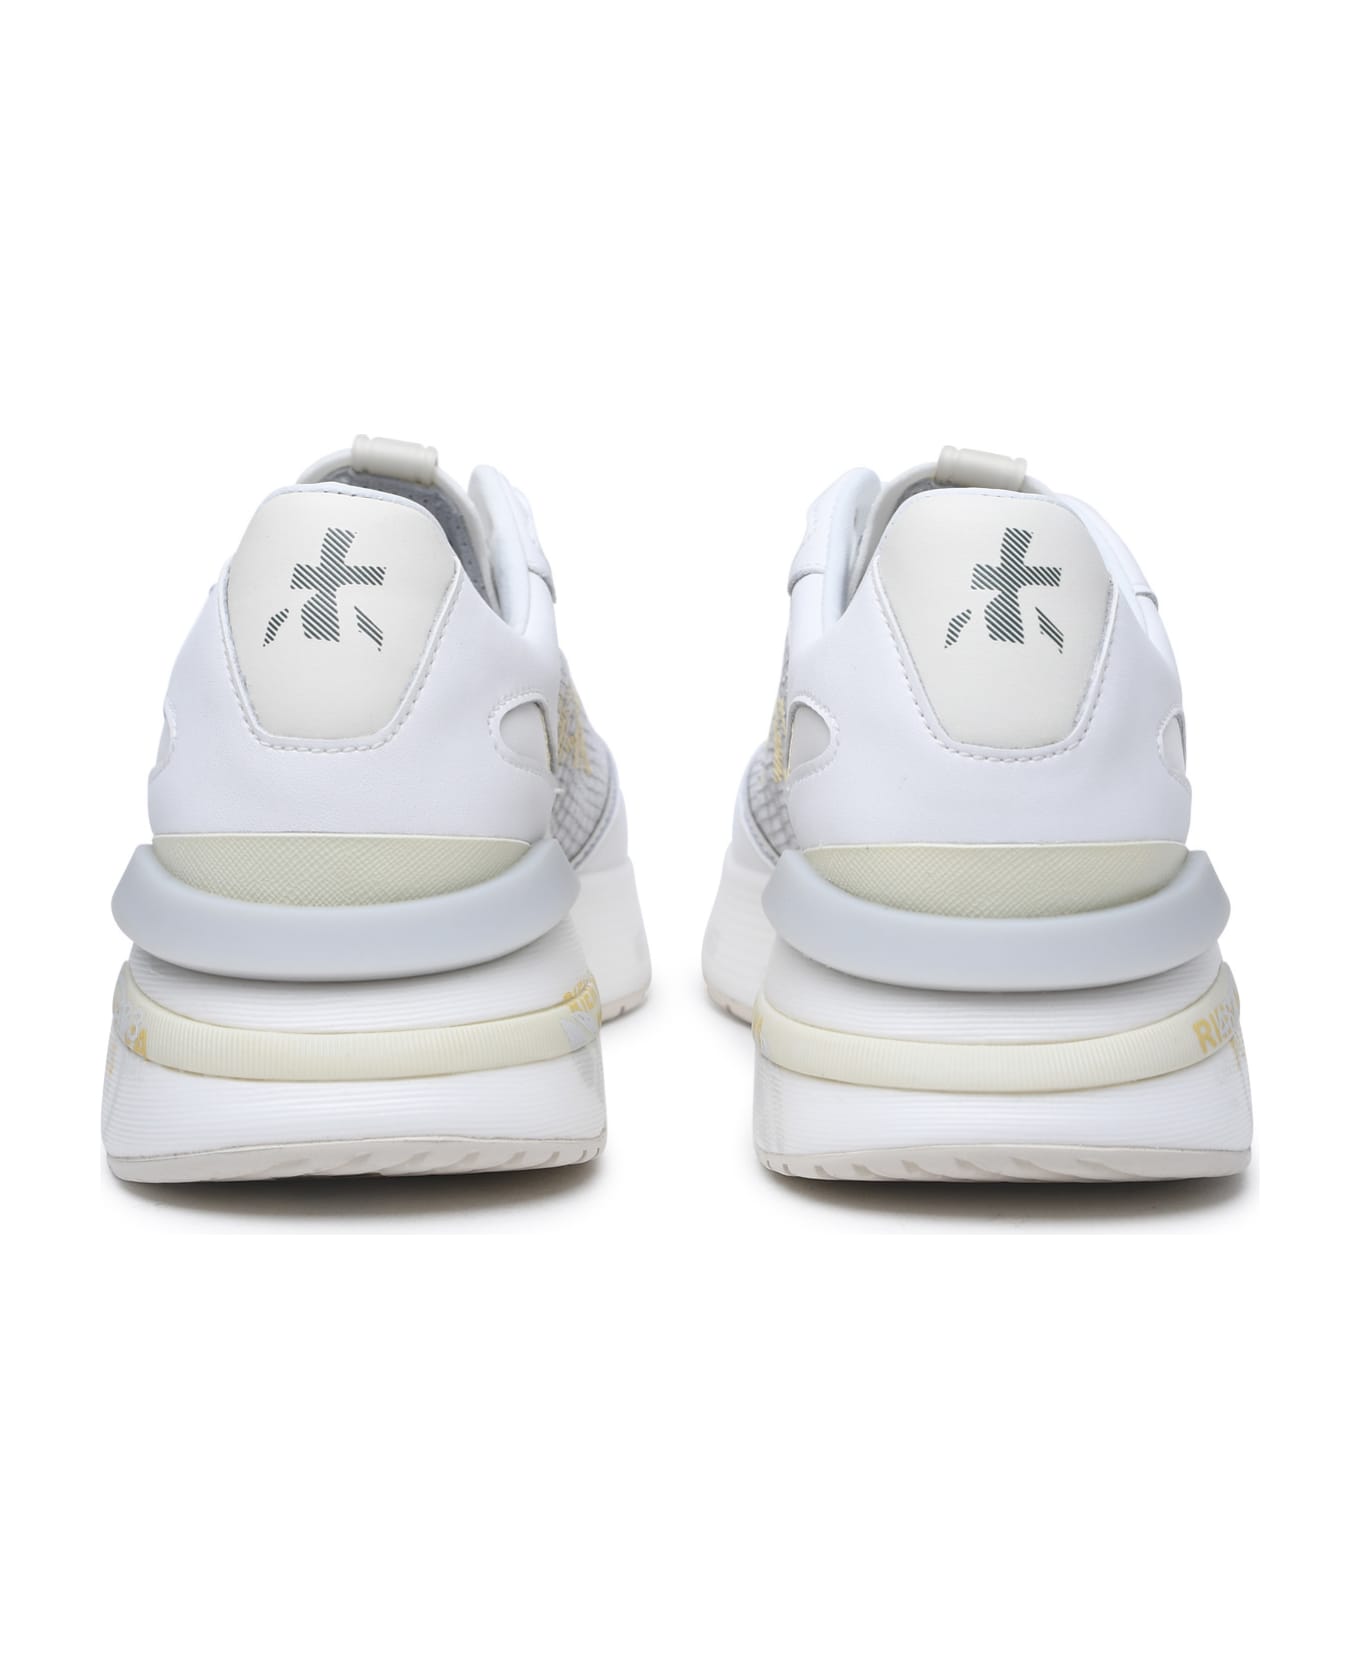 Premiata 'moerund' Sneakers In Leather And White Fabric - White